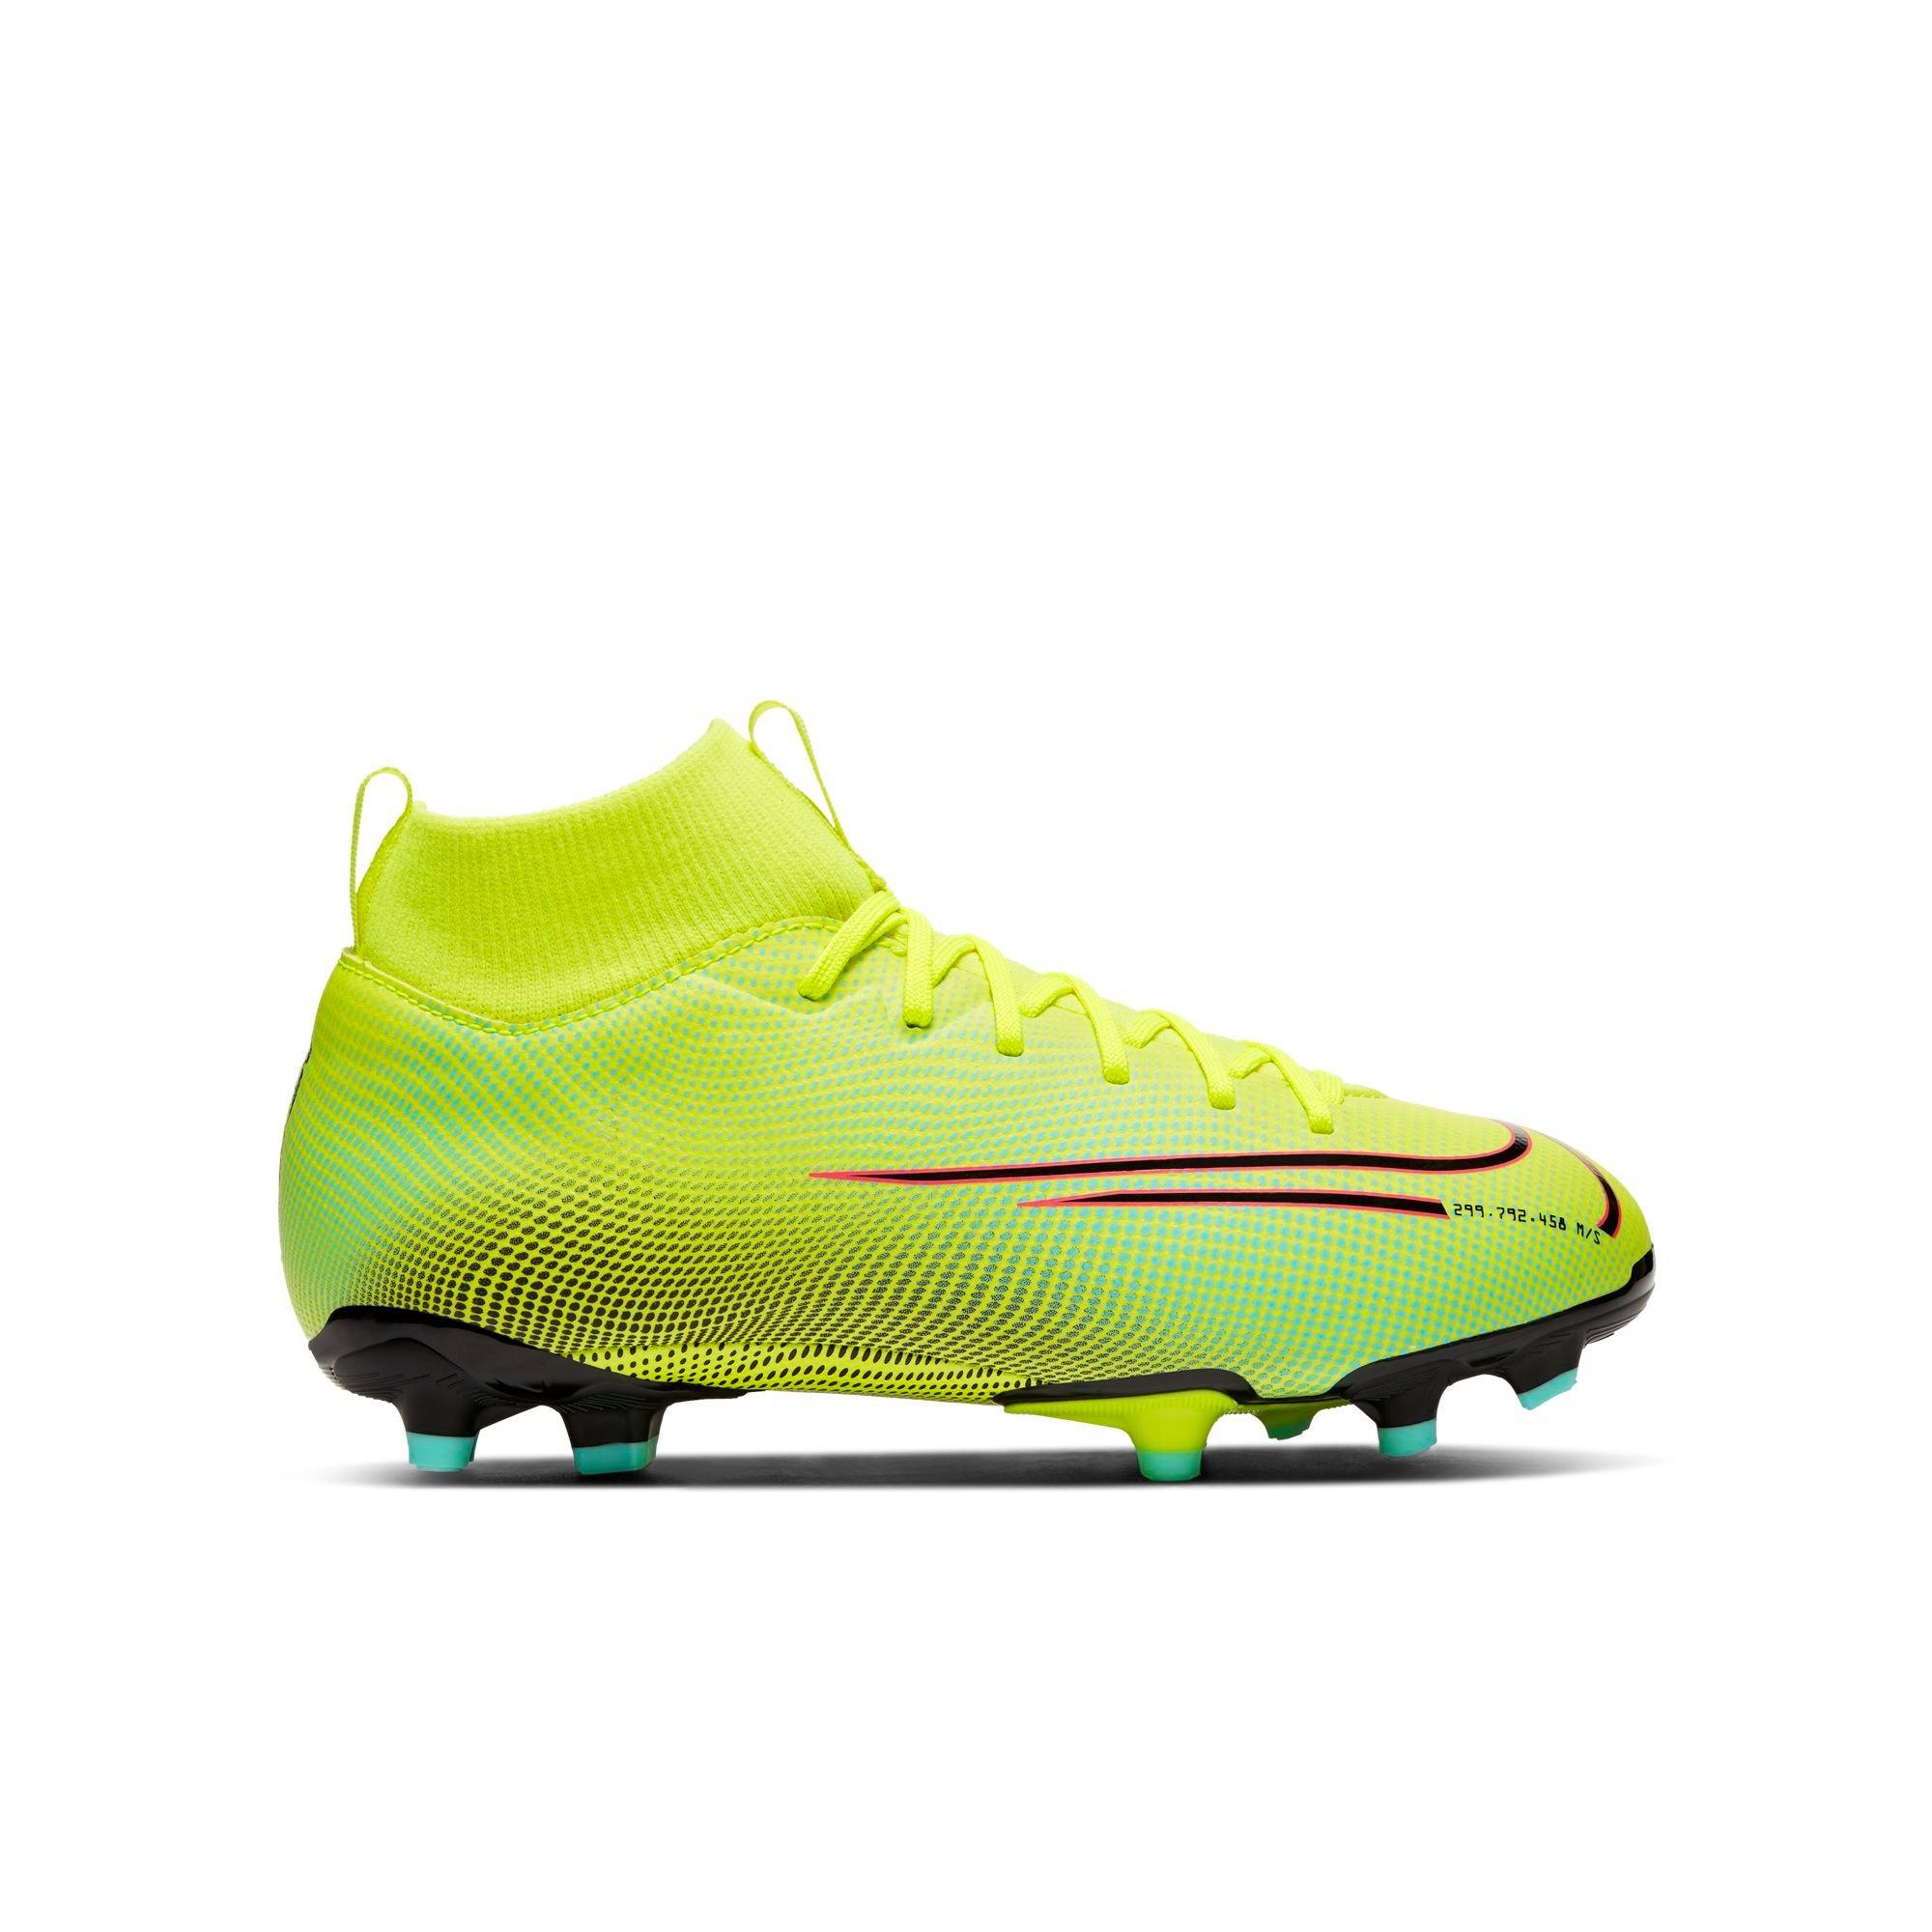 nike neon yellow soccer cleats